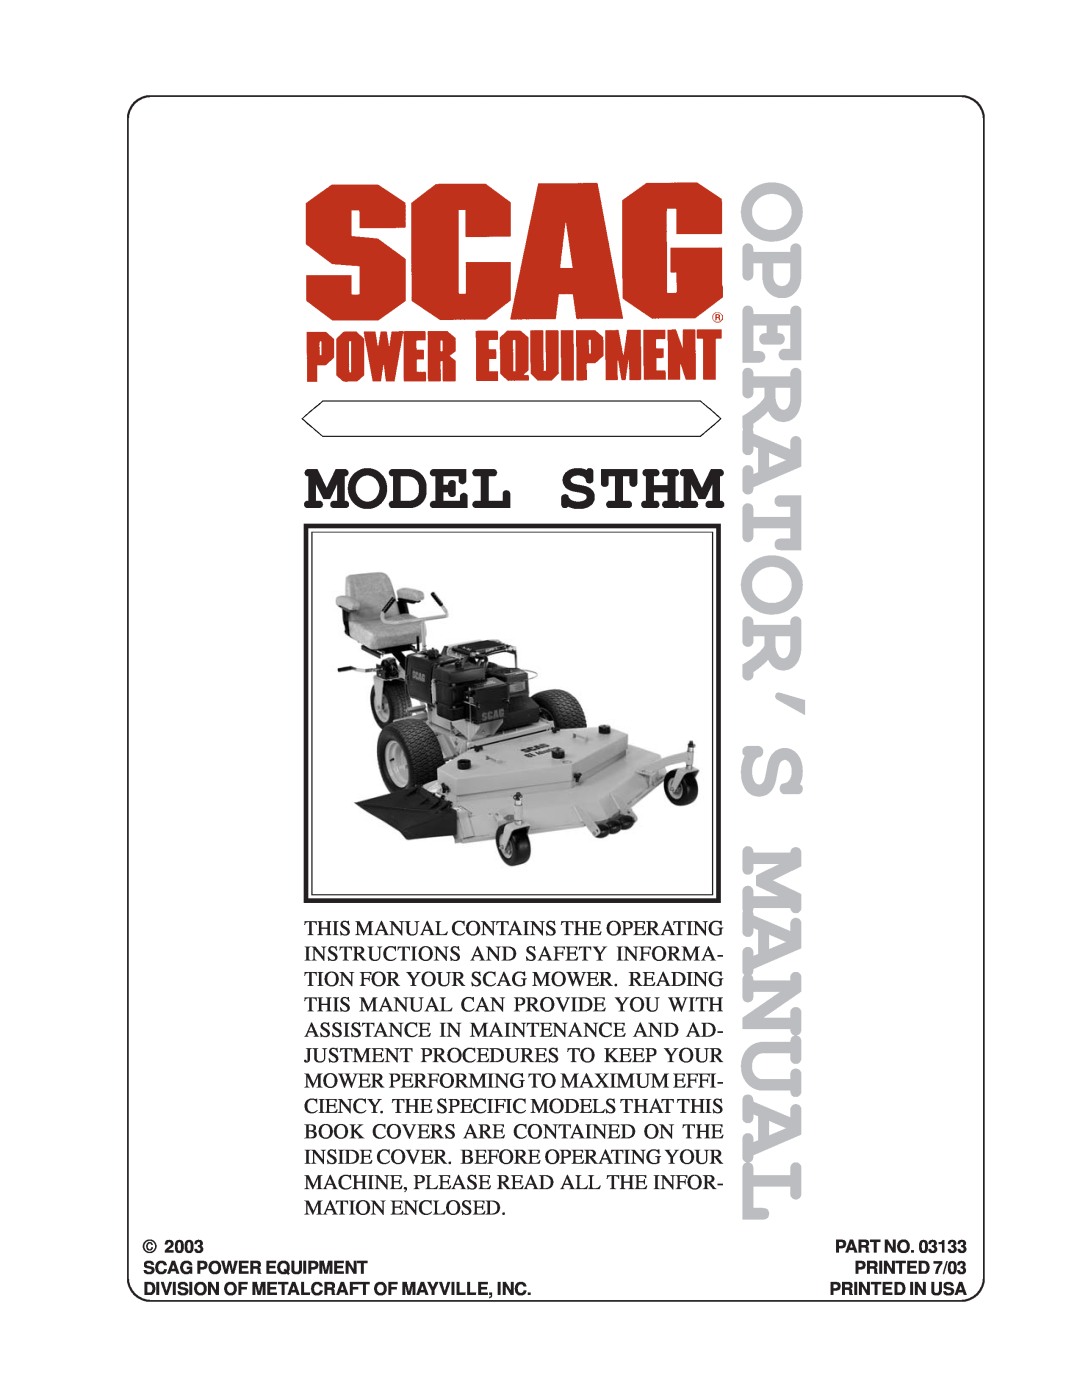 Scag Power Equipment STHM manual Operator’S Manual, Model Sthm 